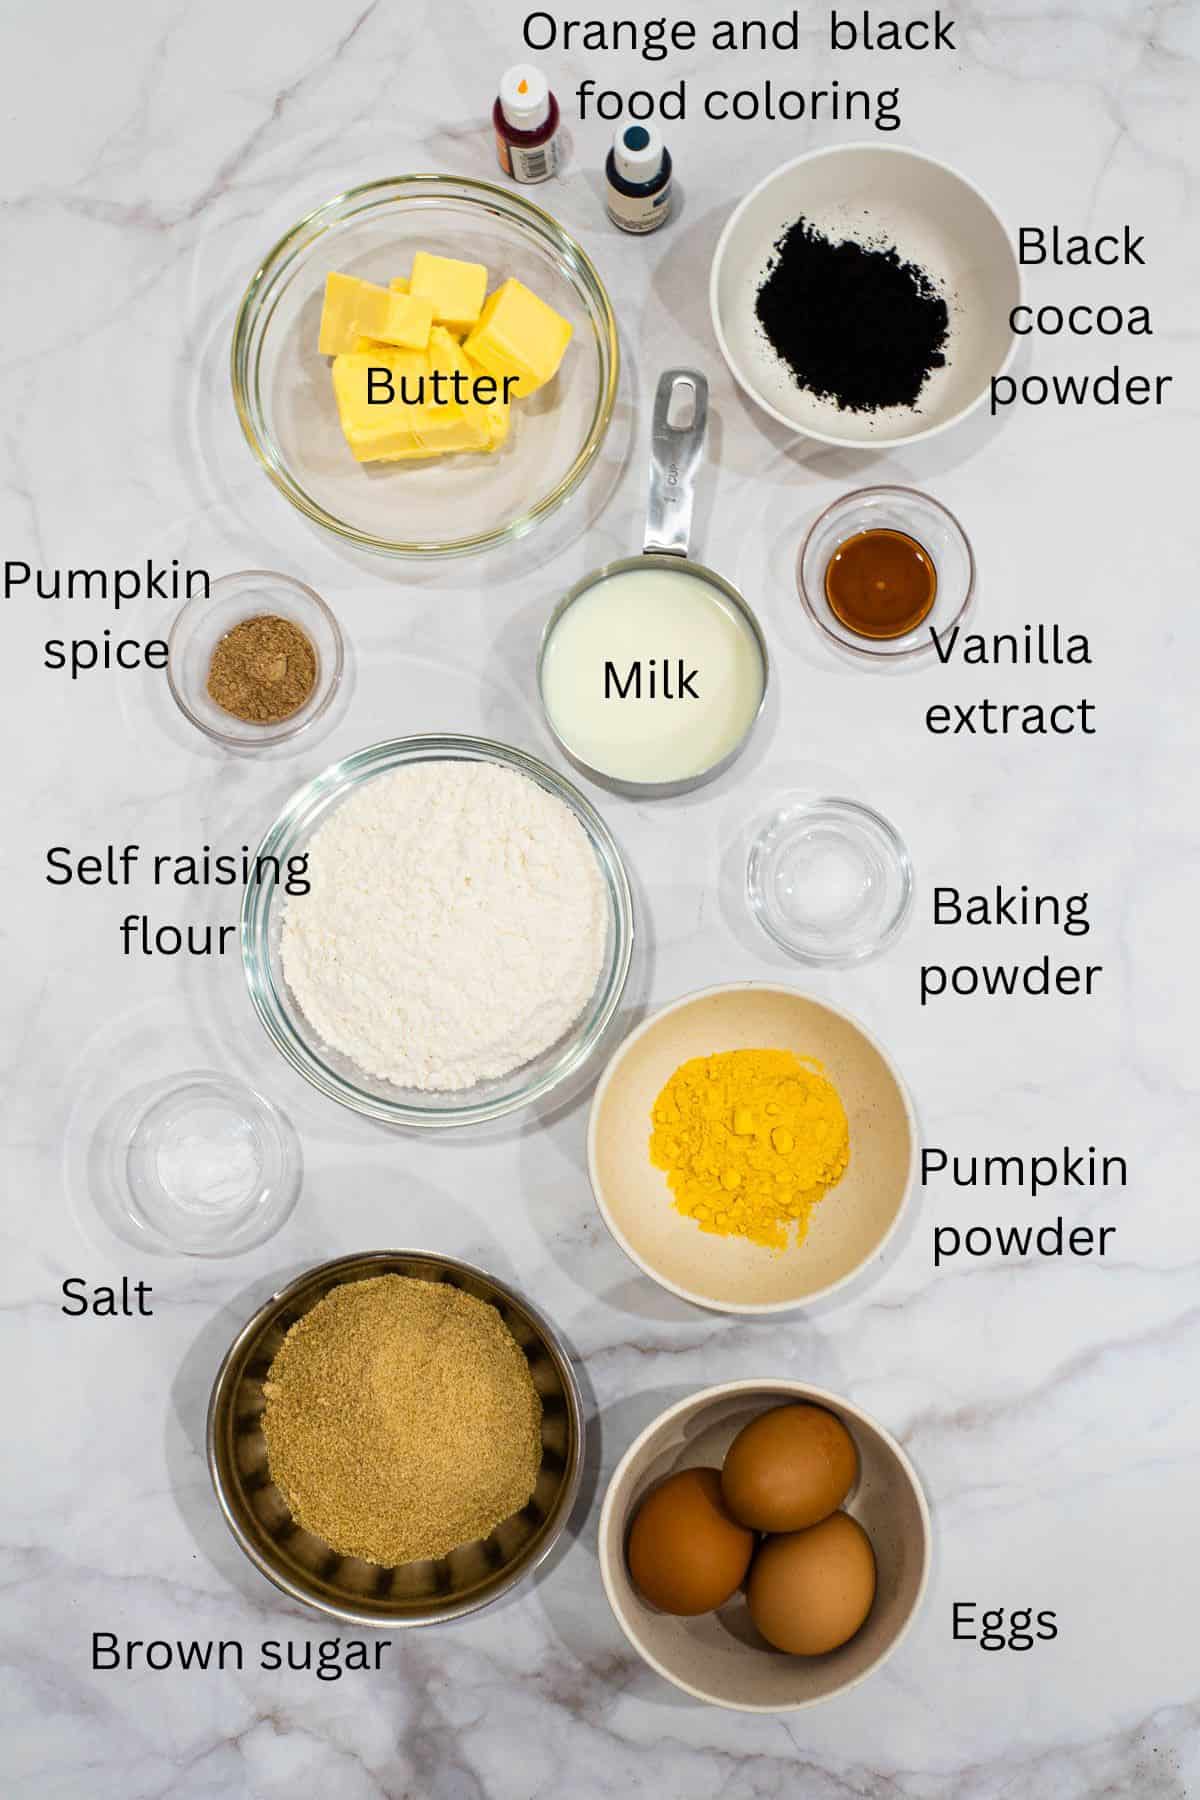 Bowls of flour, sugar, pumpkin powder, butter, eggs, spice, vanilla and cocoa powder against a marble background.